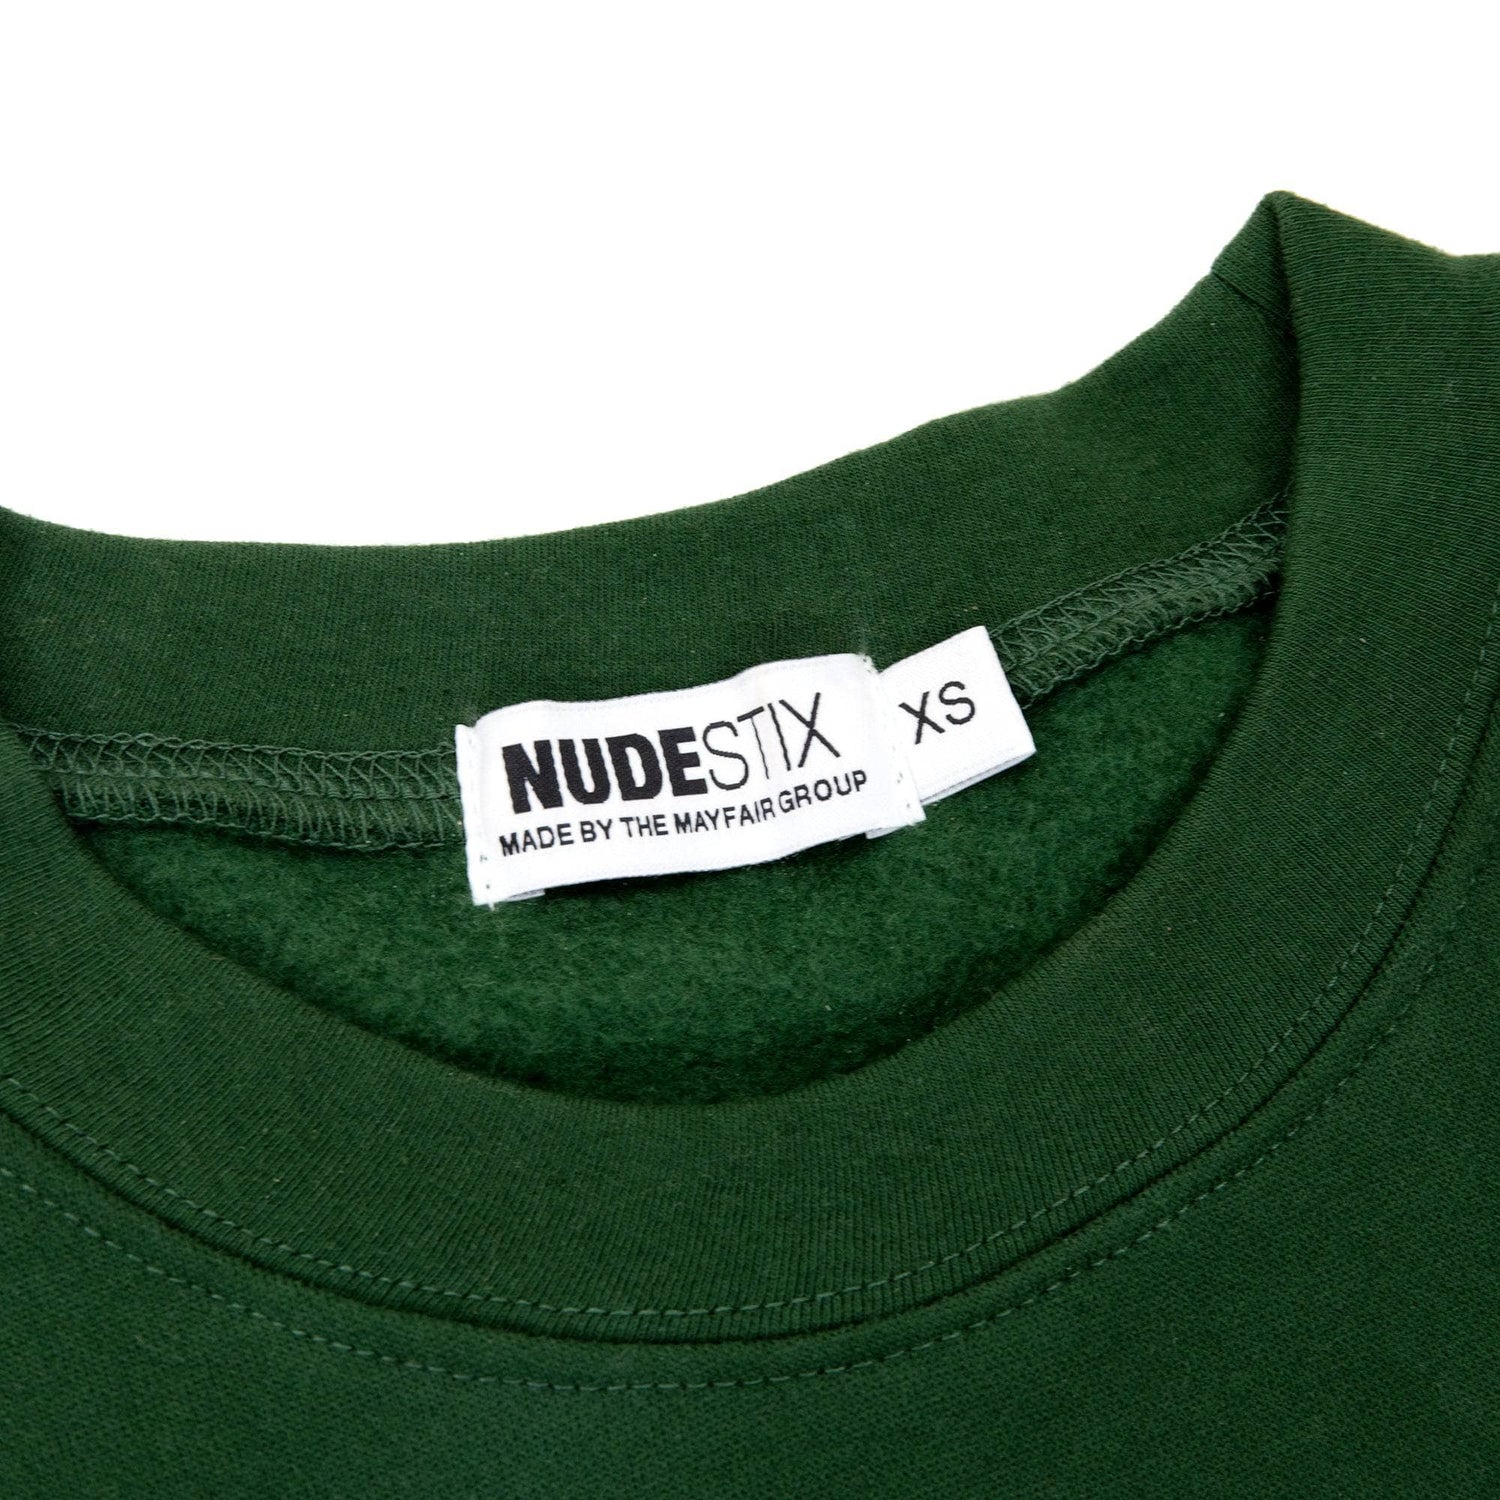 NEW NUDE LOVE CLUB Crewneck Sweaters-Green